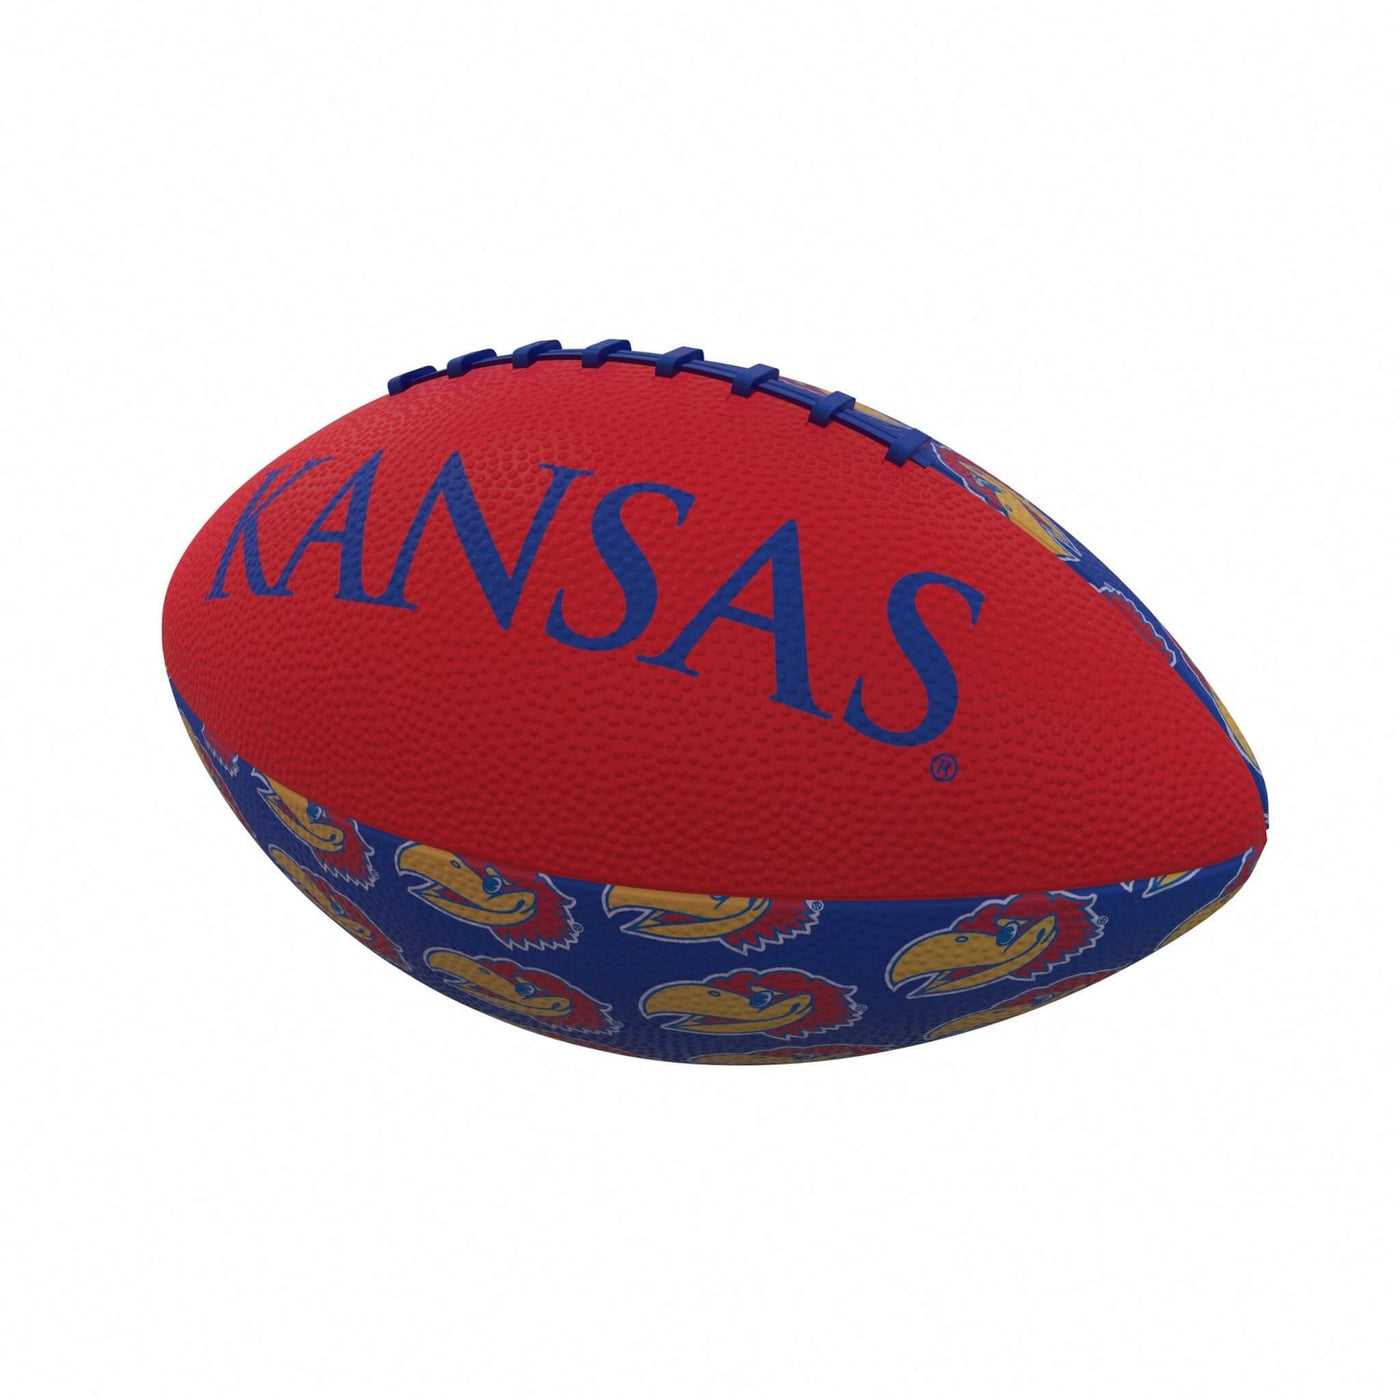 Kansas Repeating Mini-Size Rubber Football - Logo Brands